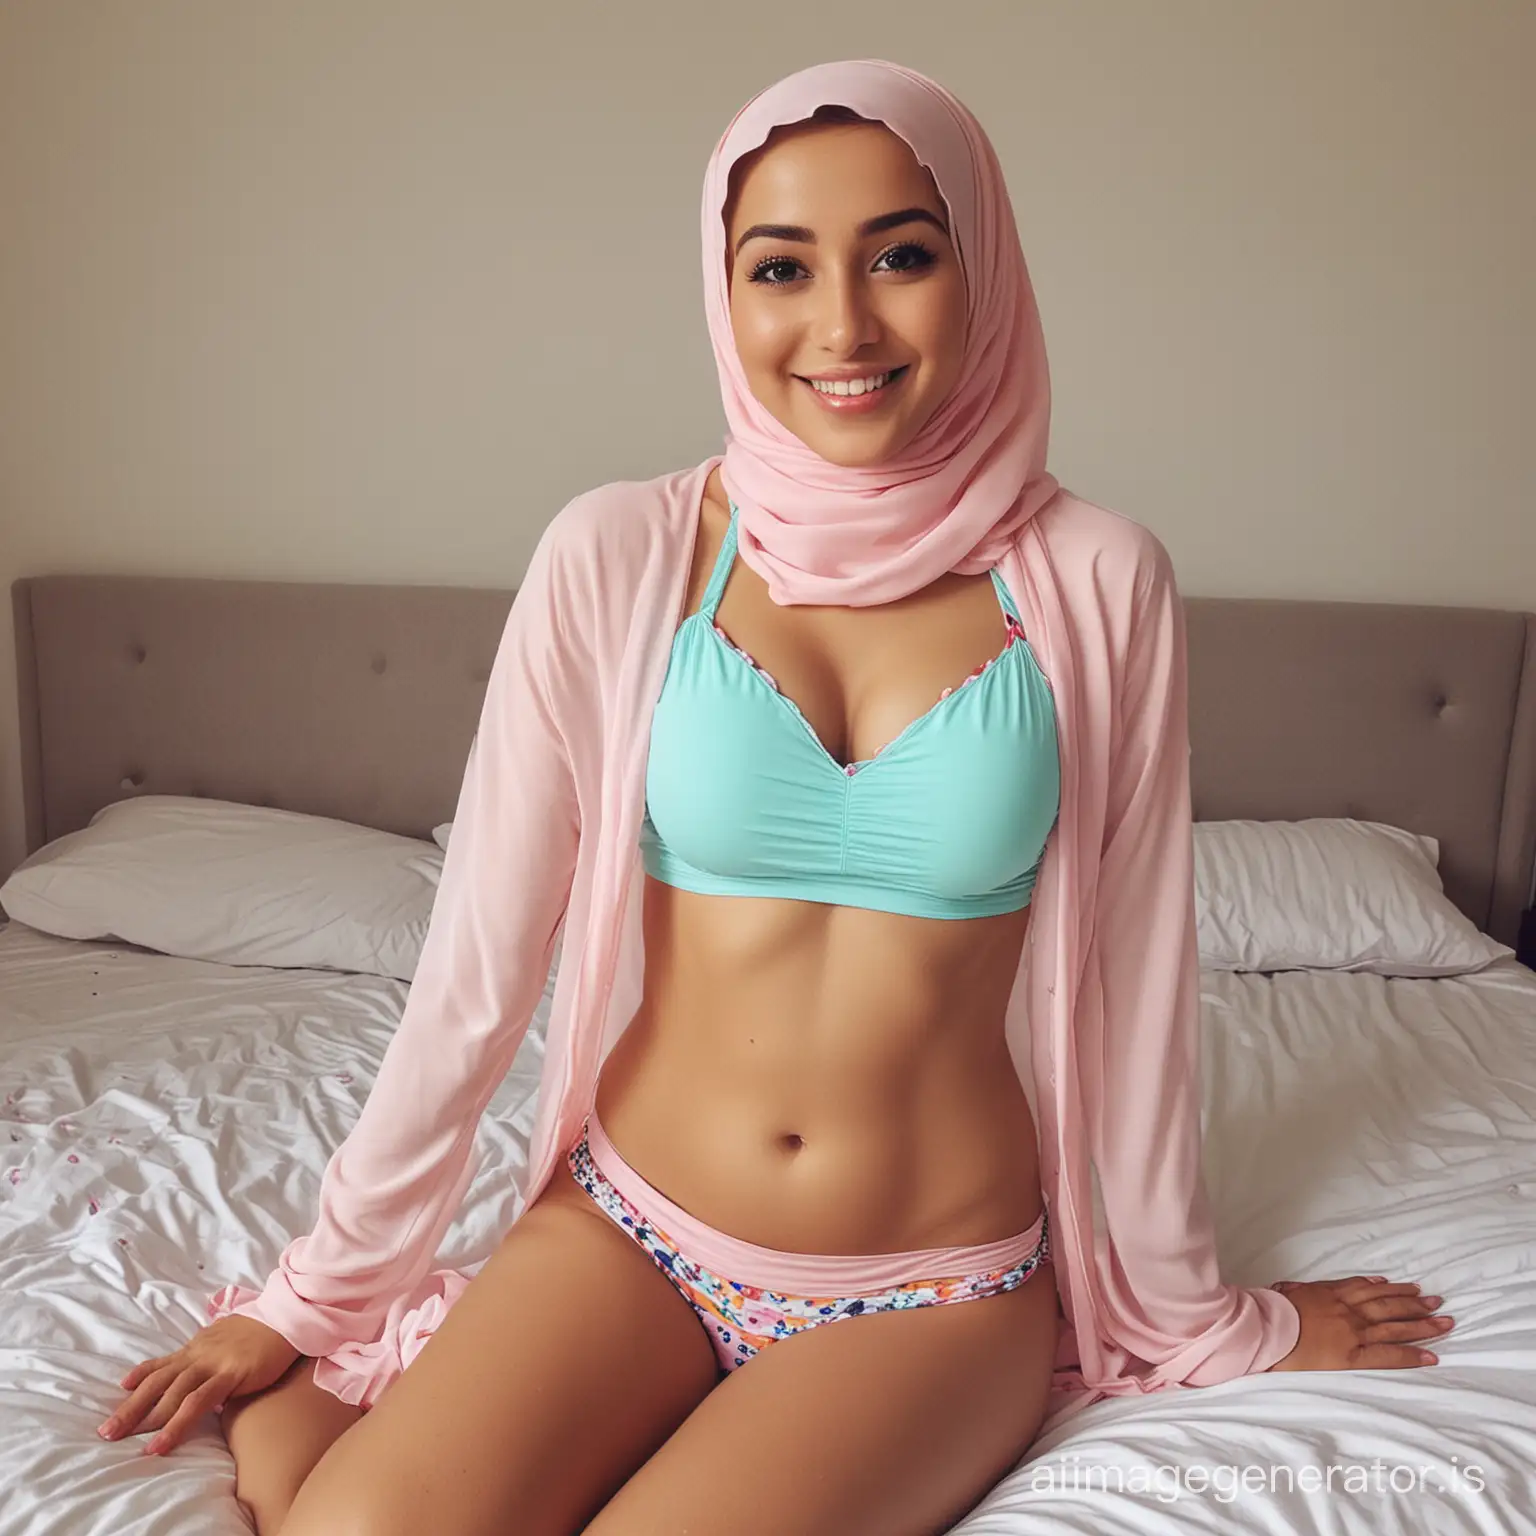 hijab, bikini, nice tummy, smiling, bedroom